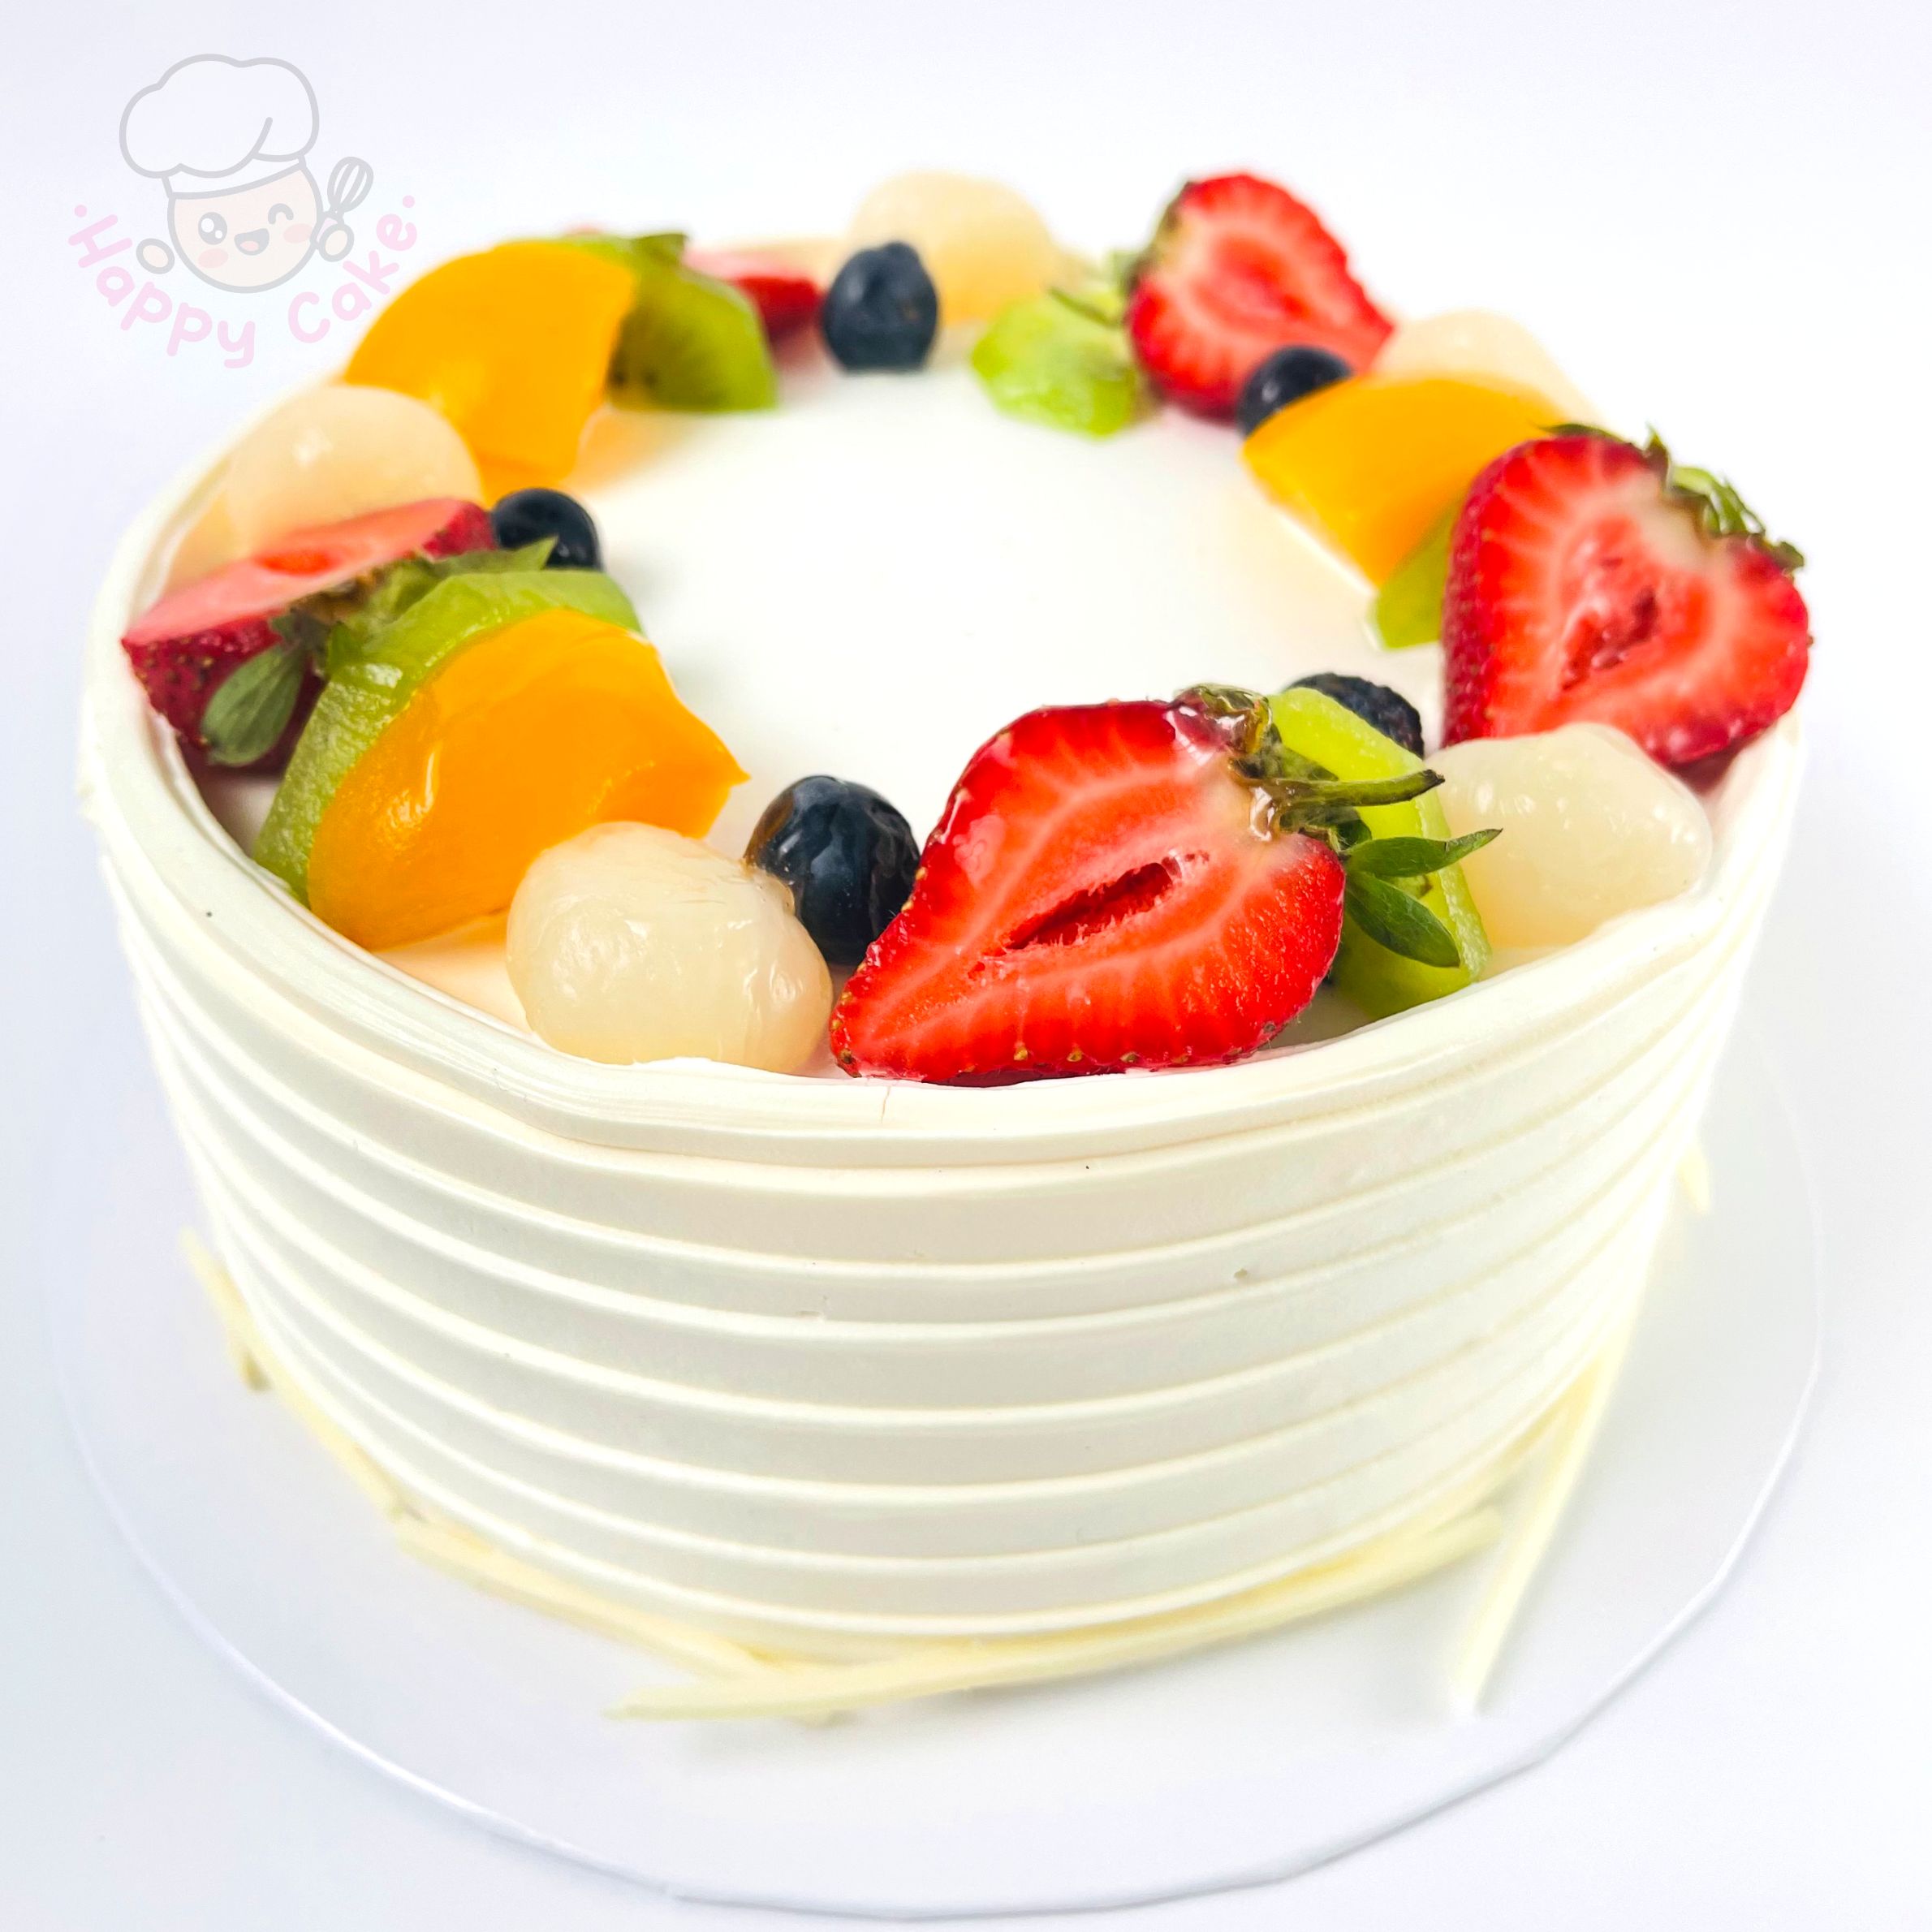 25Th Anniversary Cake With Fresh Fruits | bakehoney.com